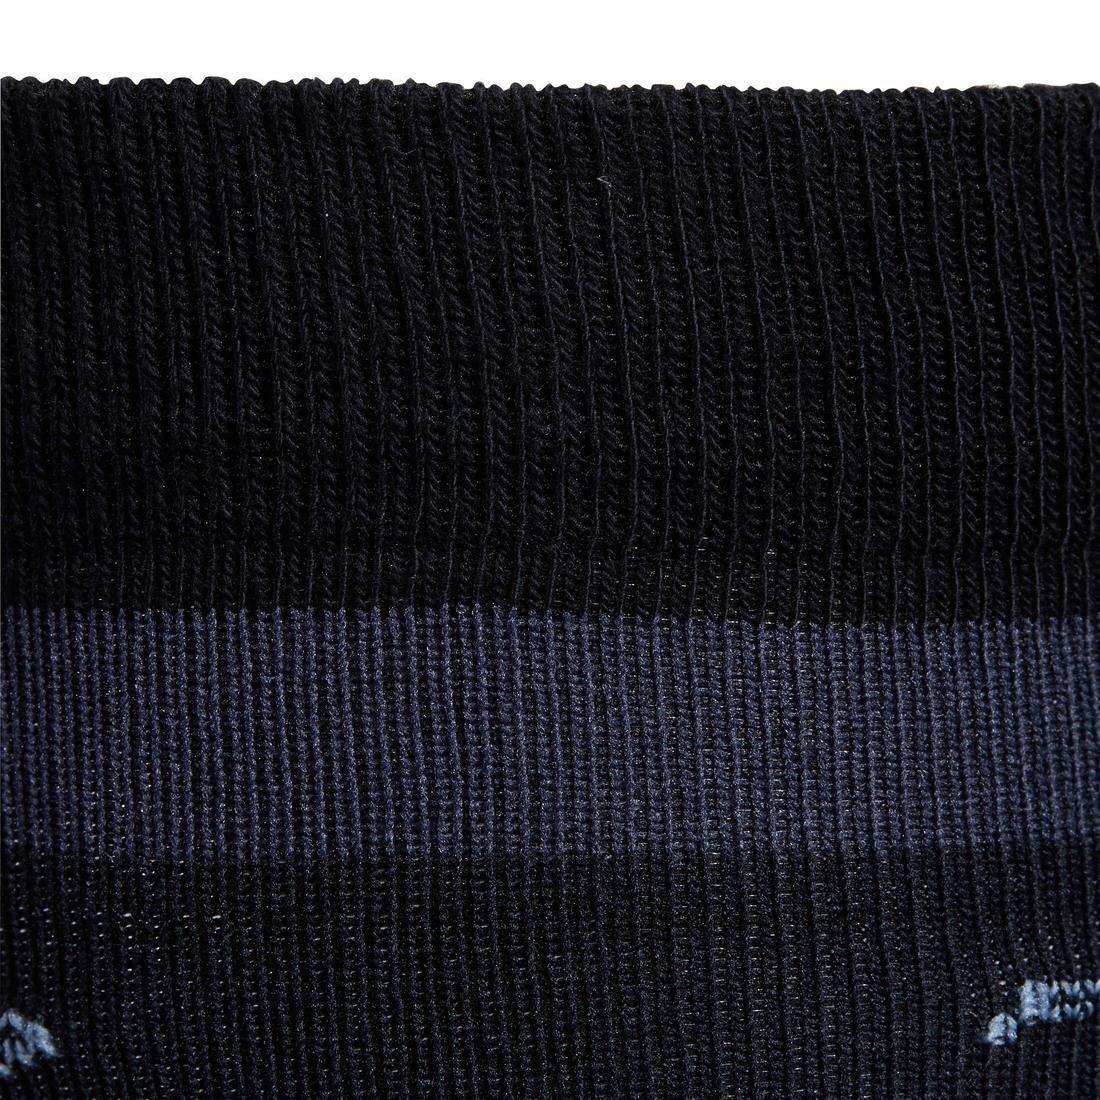 FOUGANZA - Basic Jr Brown Socks, Deep Navy Blue